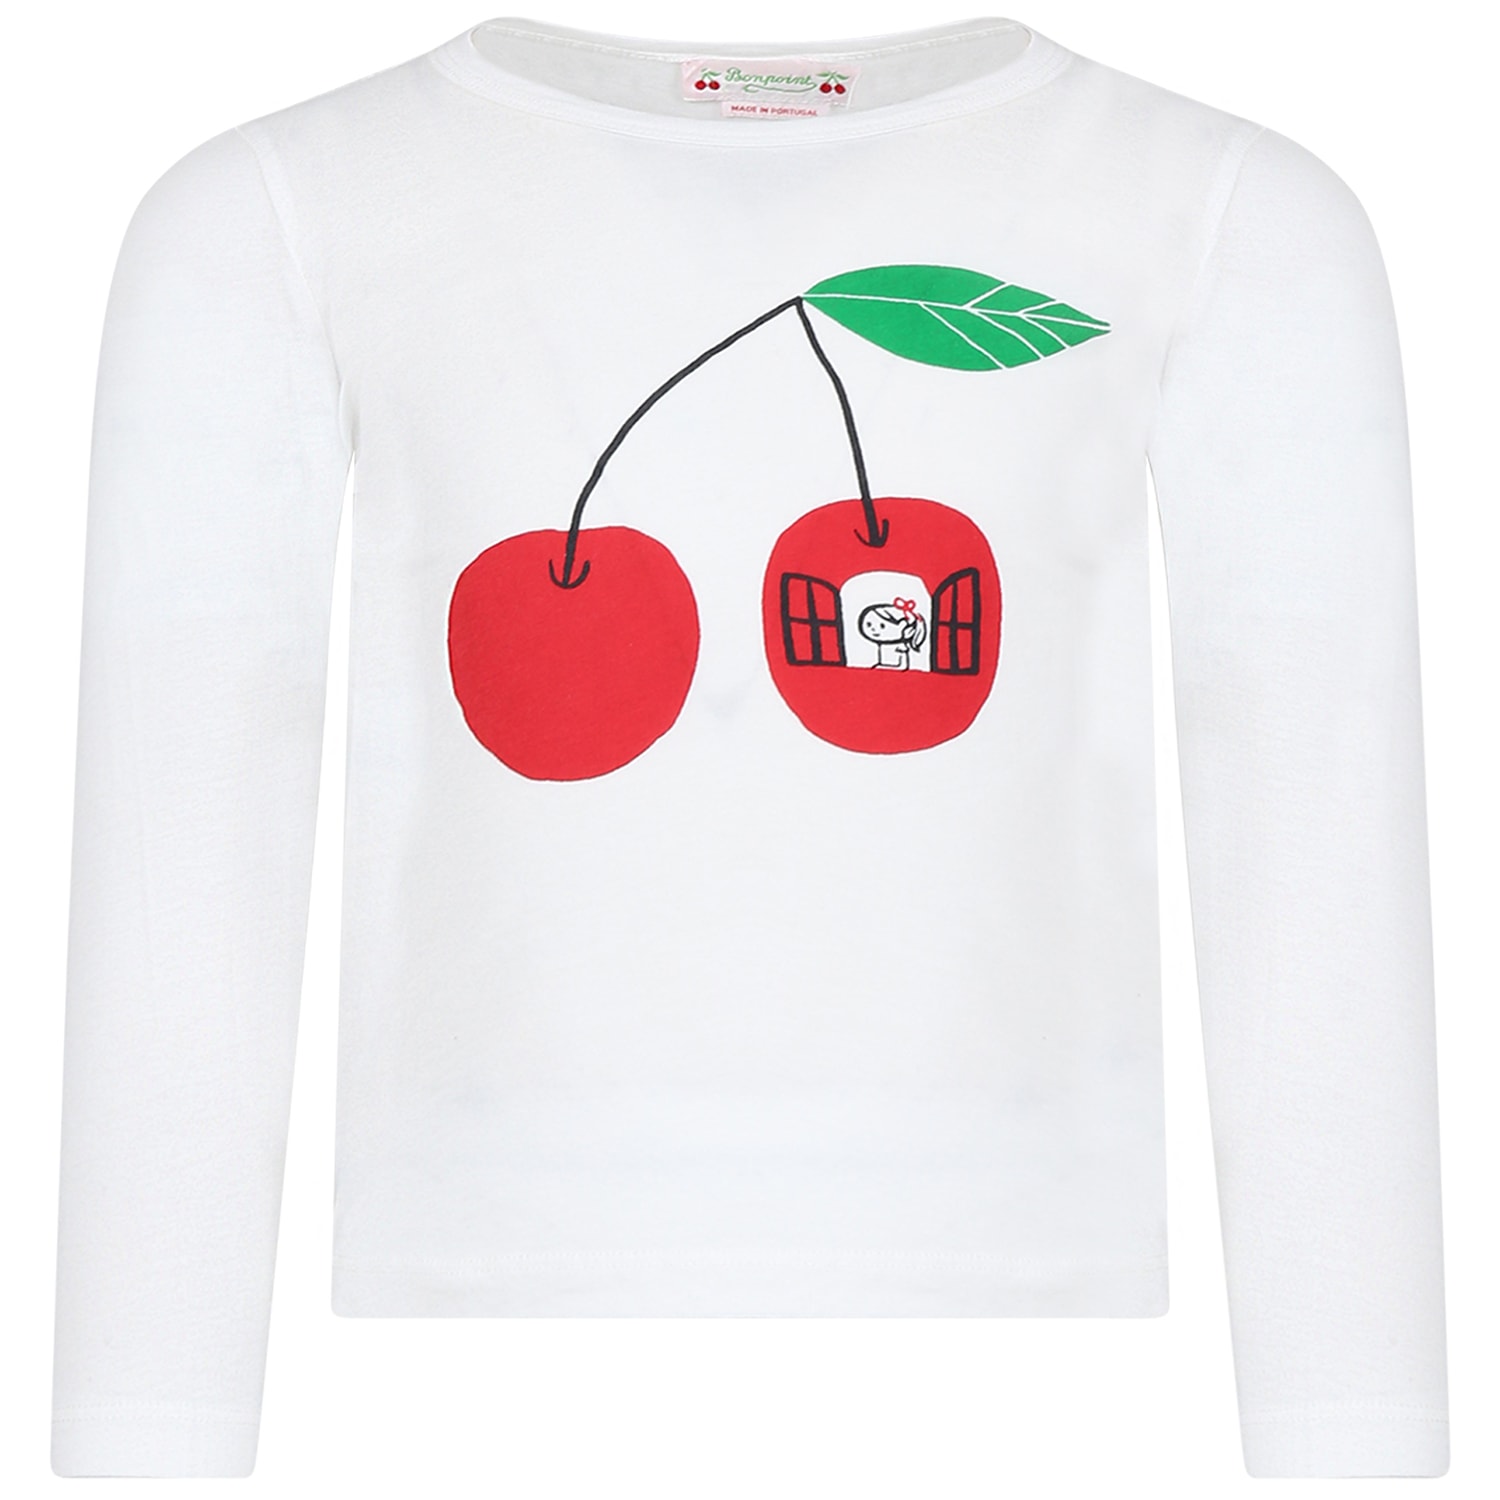 Bonpoint Kids' White T-shirt For Girl With Cherries